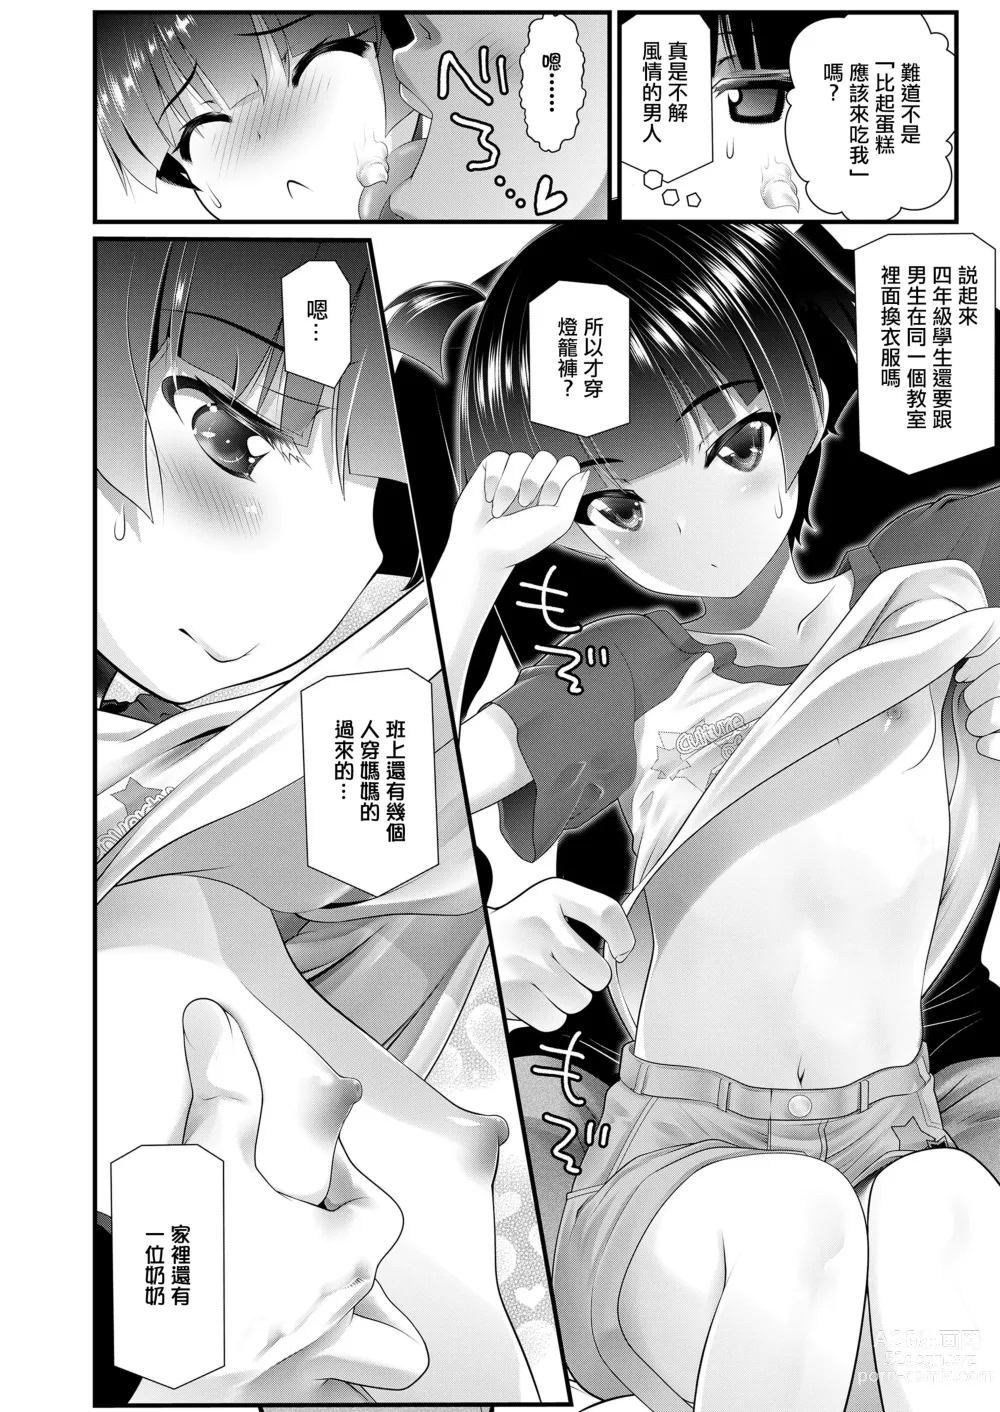 Page 6 of manga Omochikaeri